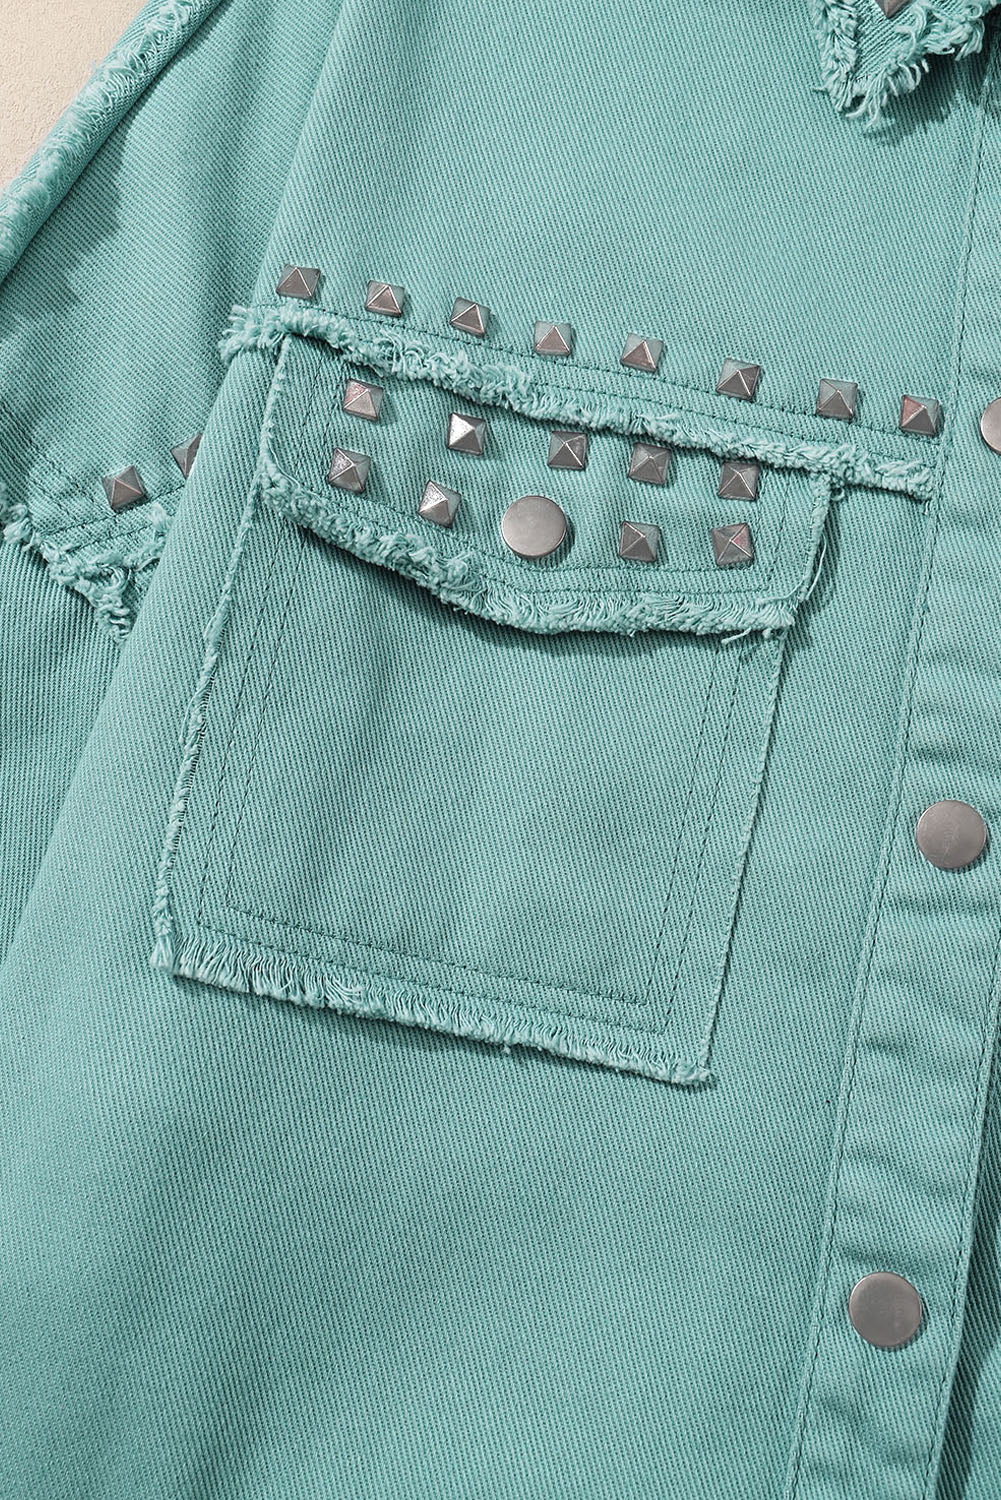 Giacca di jeans rivettata con finiture sfilacciate verde nebbia